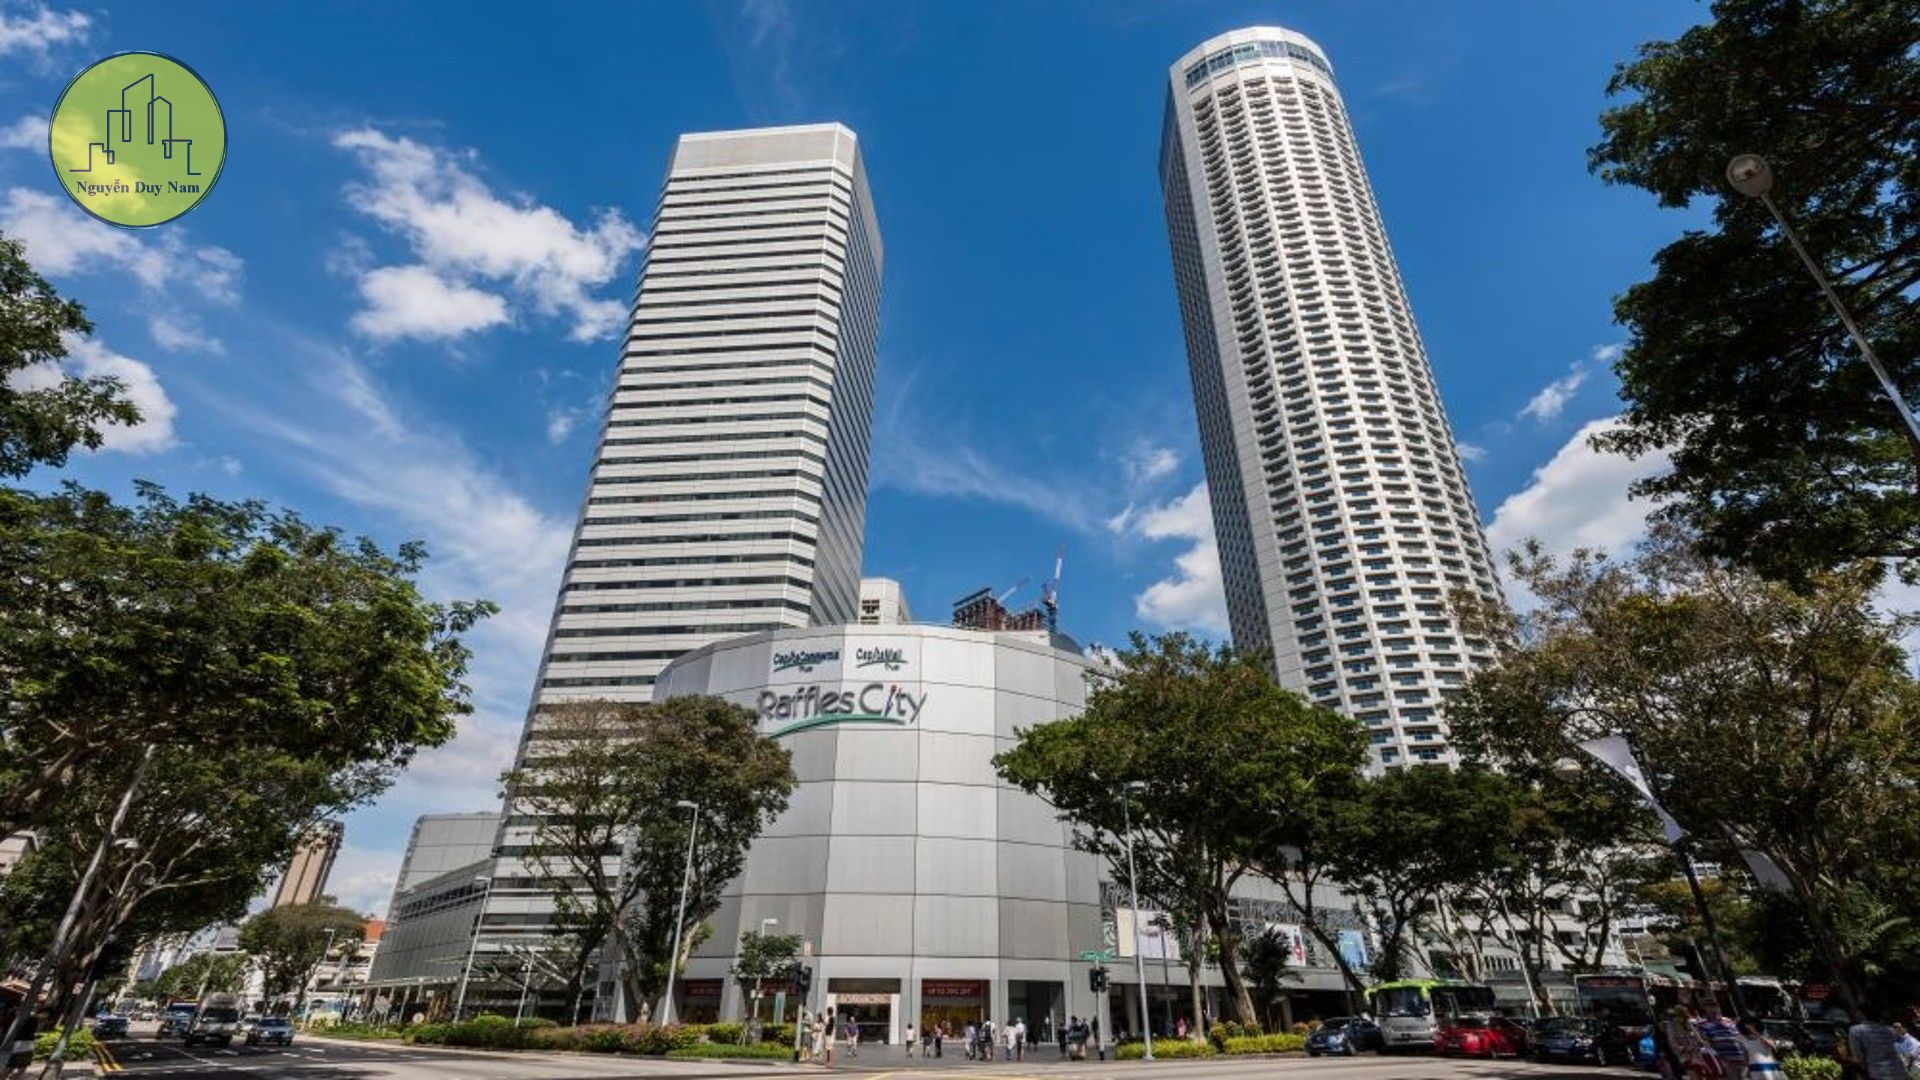 Trung tâm mua sắm nổi tiếng nhất Singapore - Raffles City